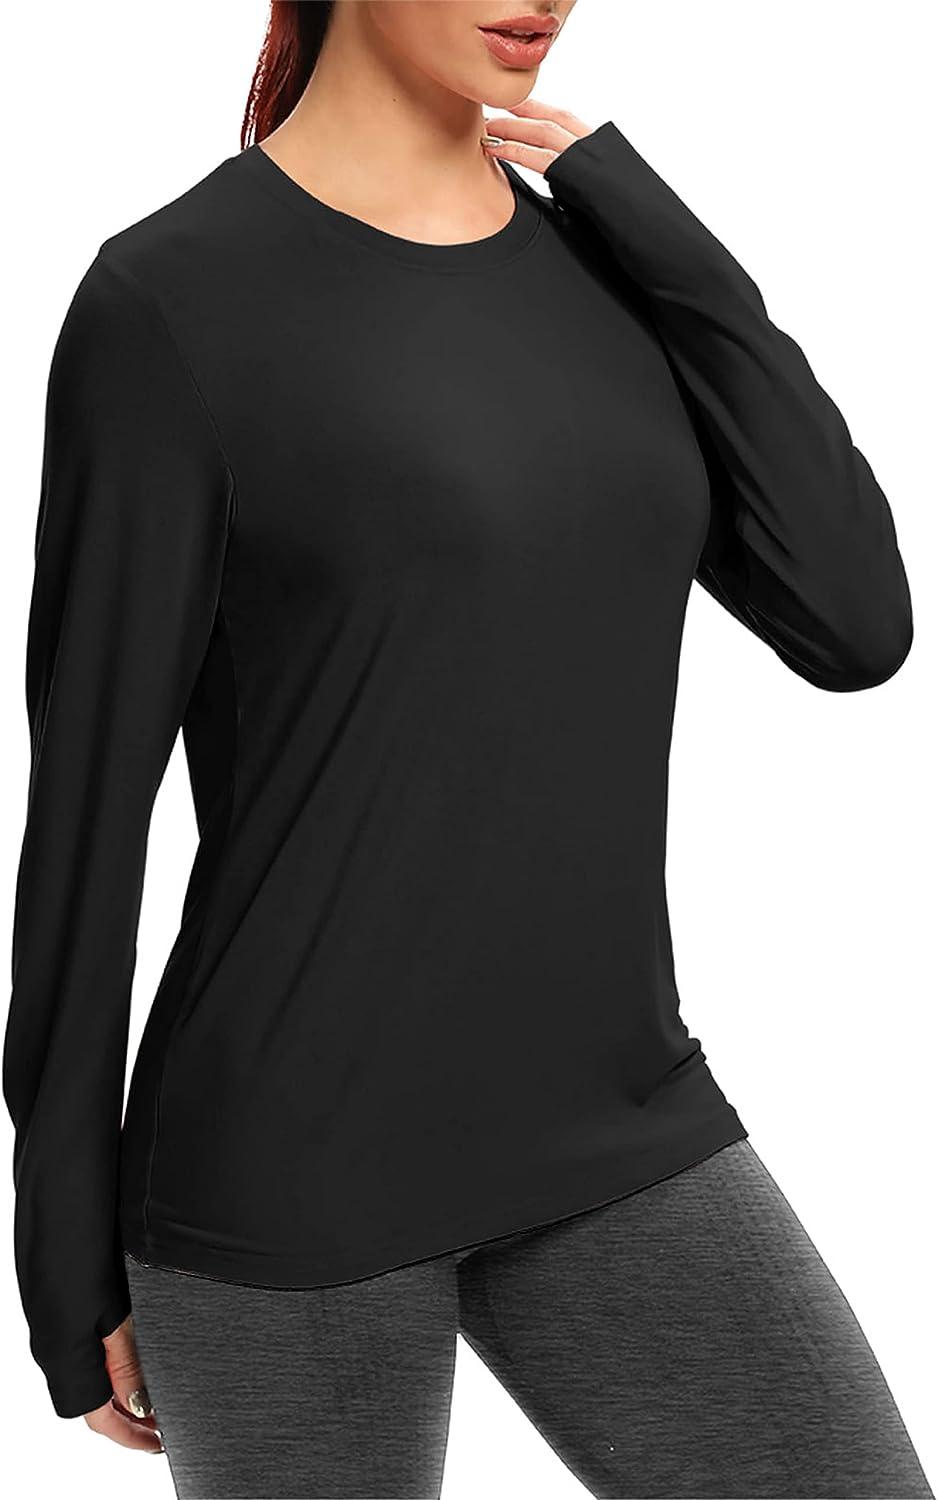 Bestisun Long Sleeve Workout Shirts for Women-Women's Athletic